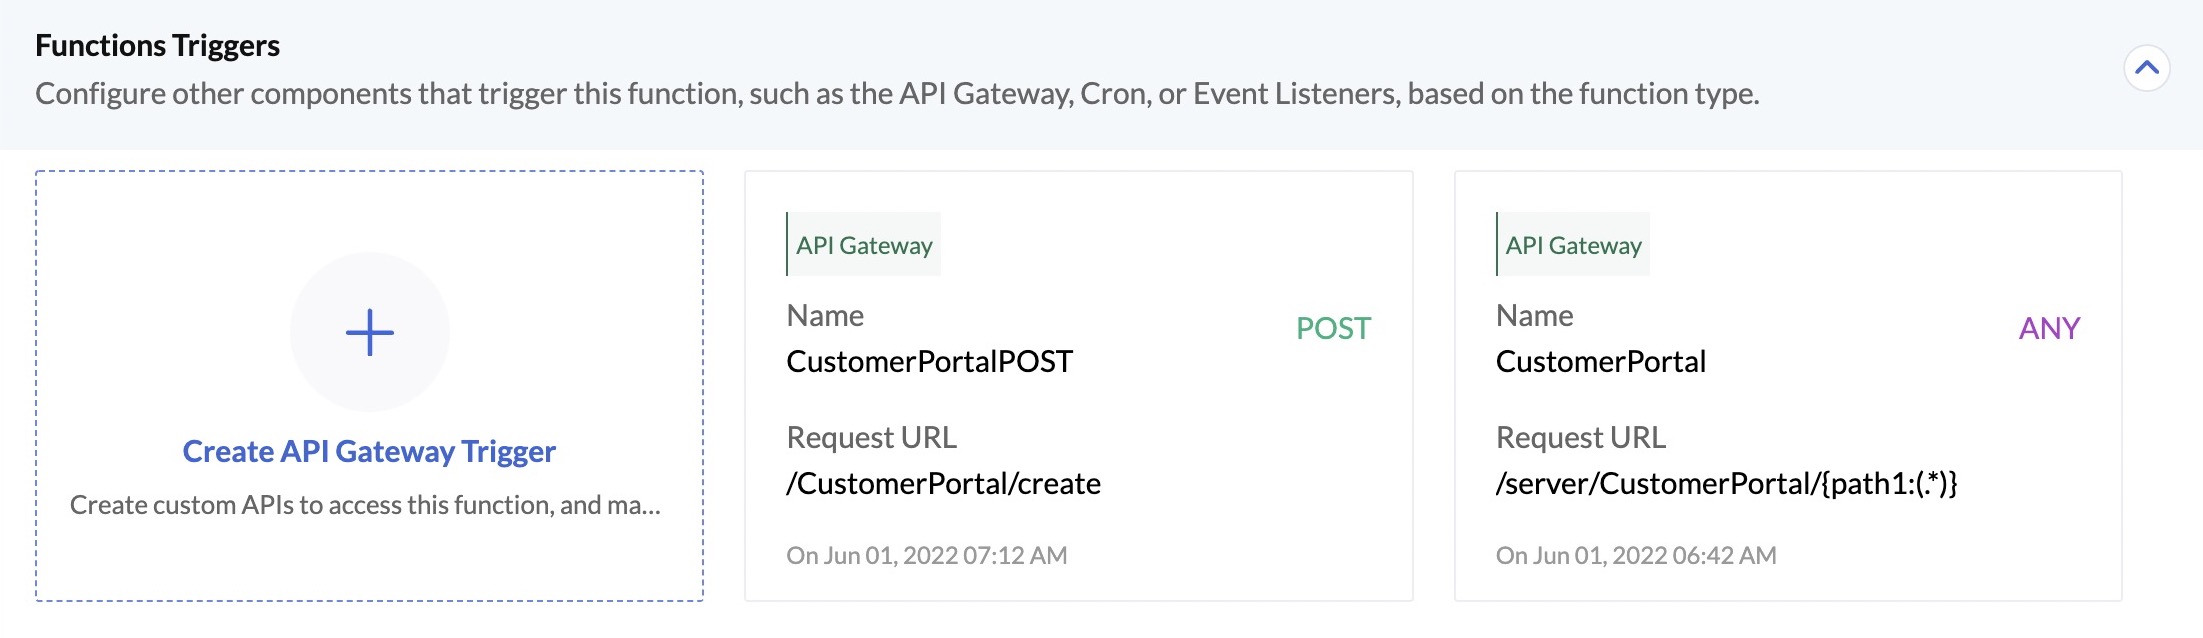 Functions- API Gateway Trigger